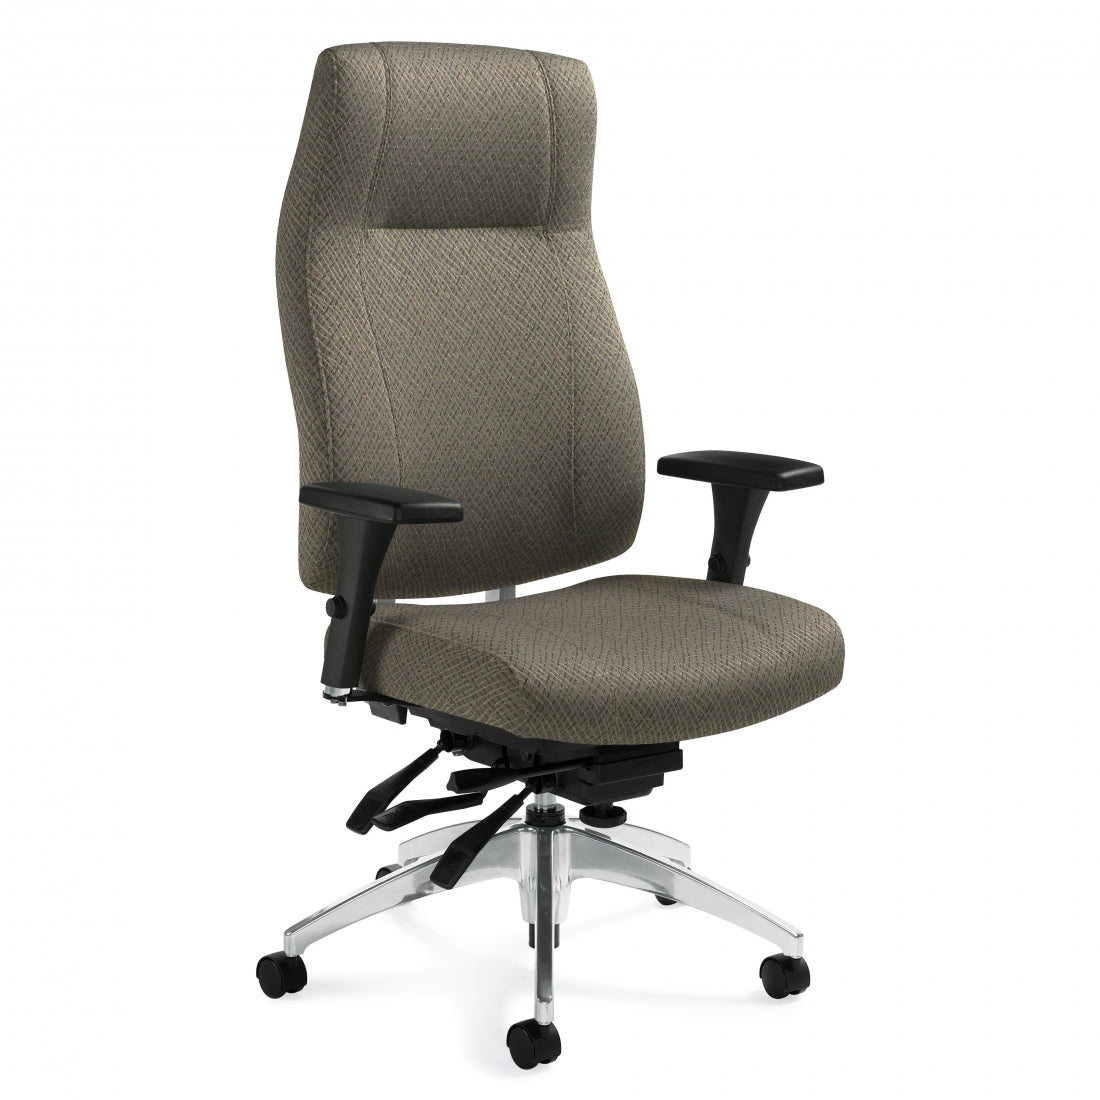 Customized Executive Task Chair G3650-3/-8/3651-3/-8 - Kainosbuy.com